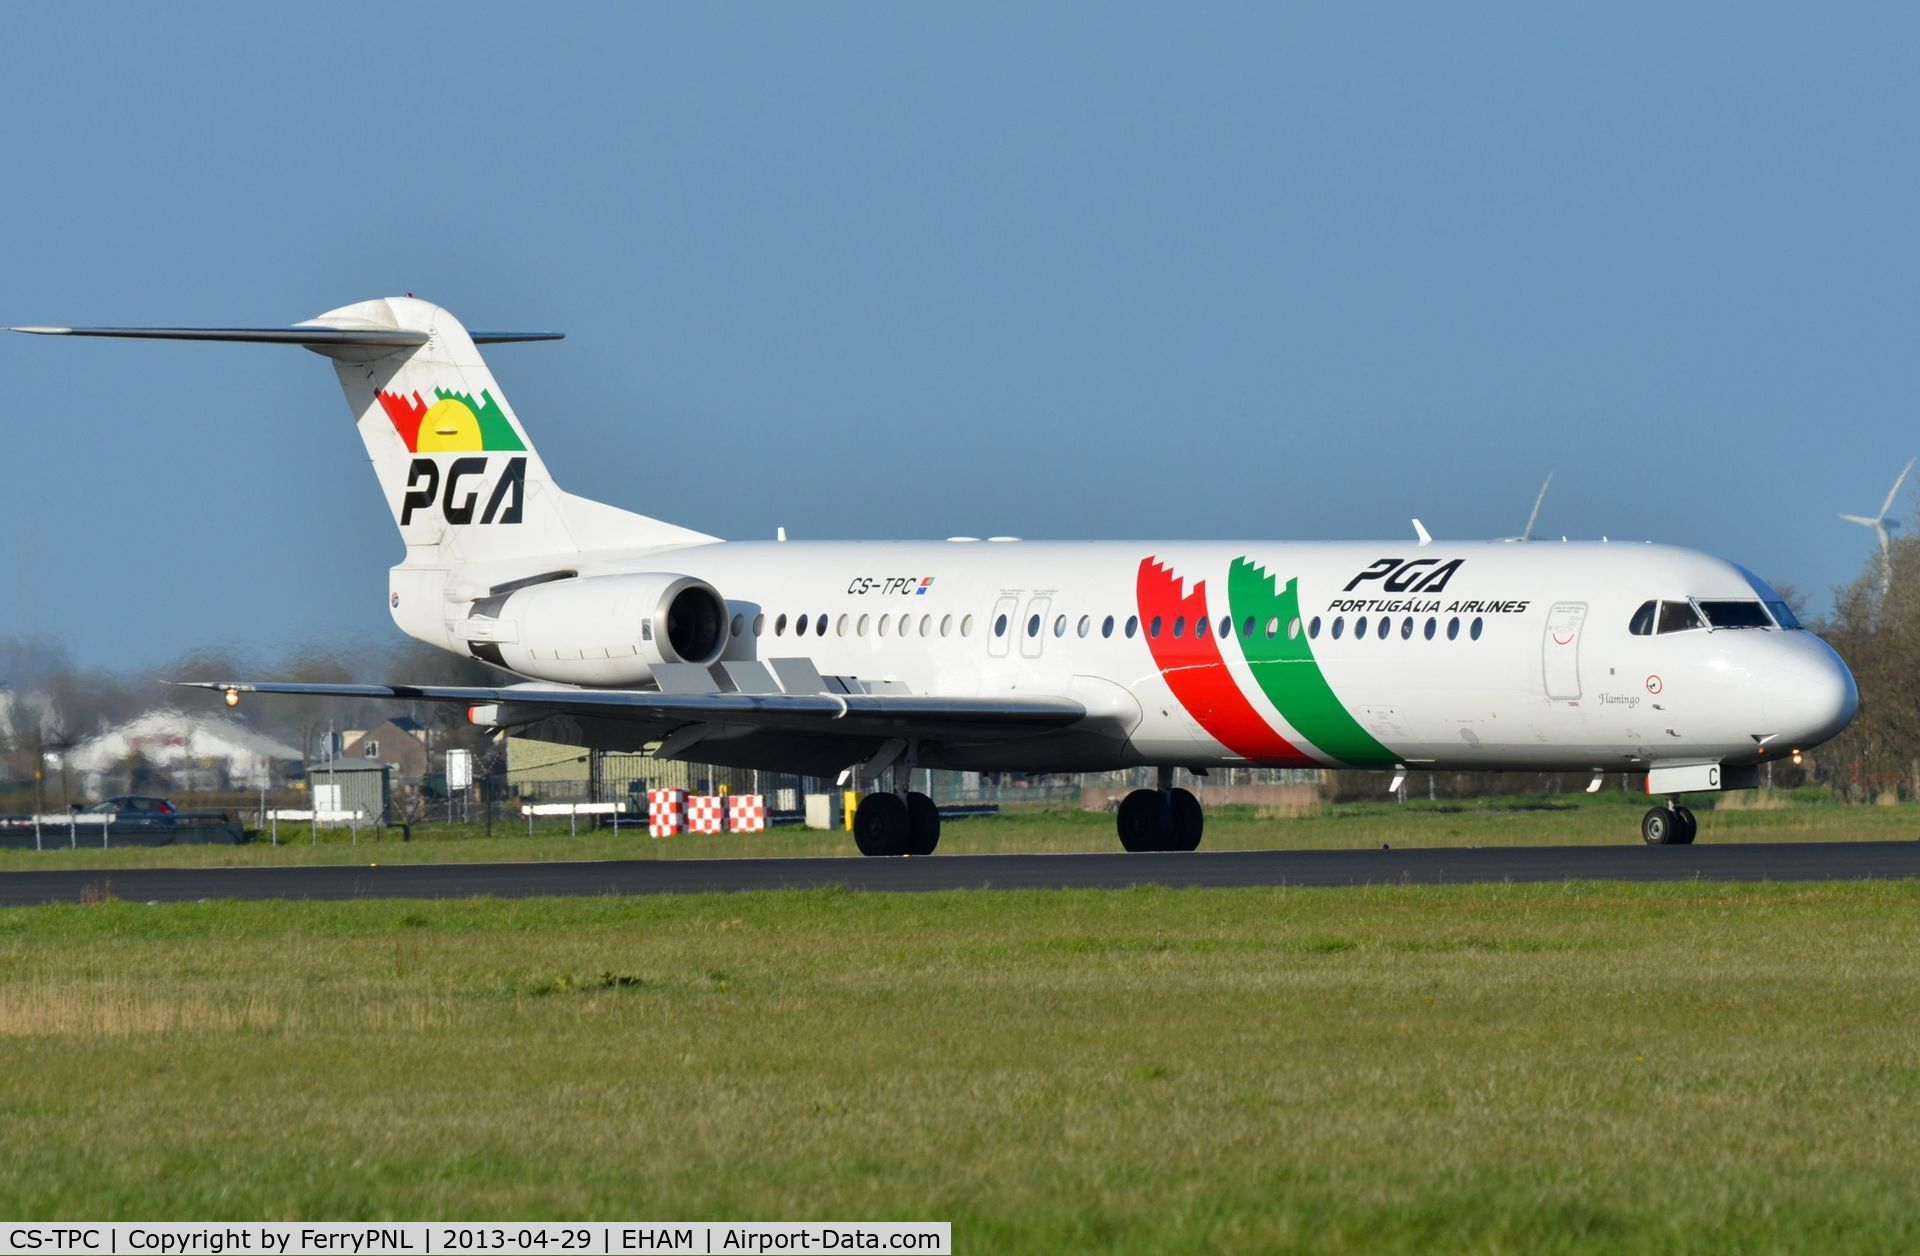 CS-TPC, 1990 Fokker 100 (F-28-0100) C/N 11287, The Flamingo has landed, Fk100 of Portugalia.